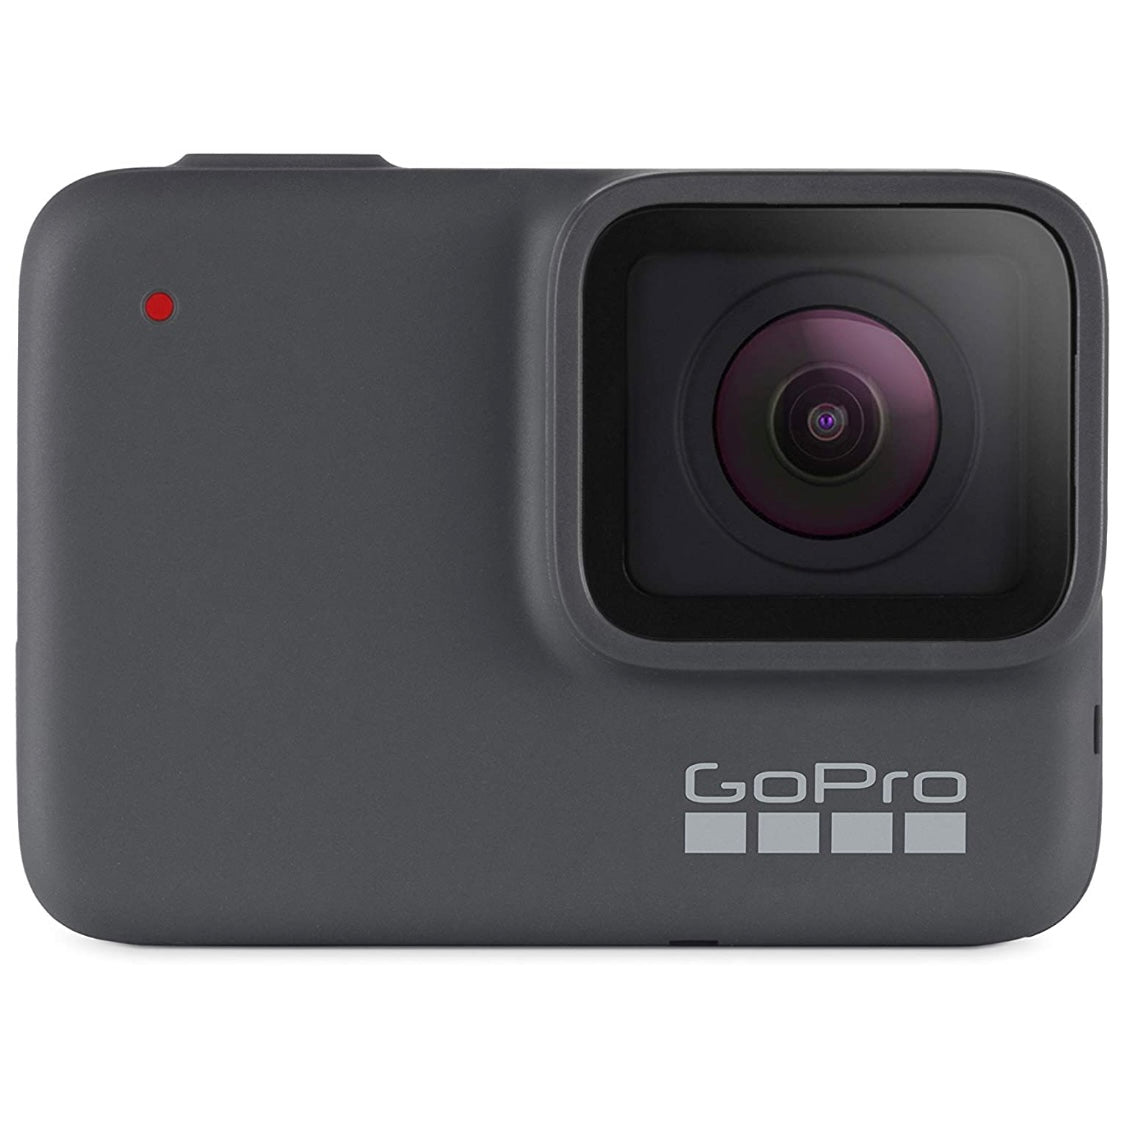 GoPro Camera Hero 7 Silver